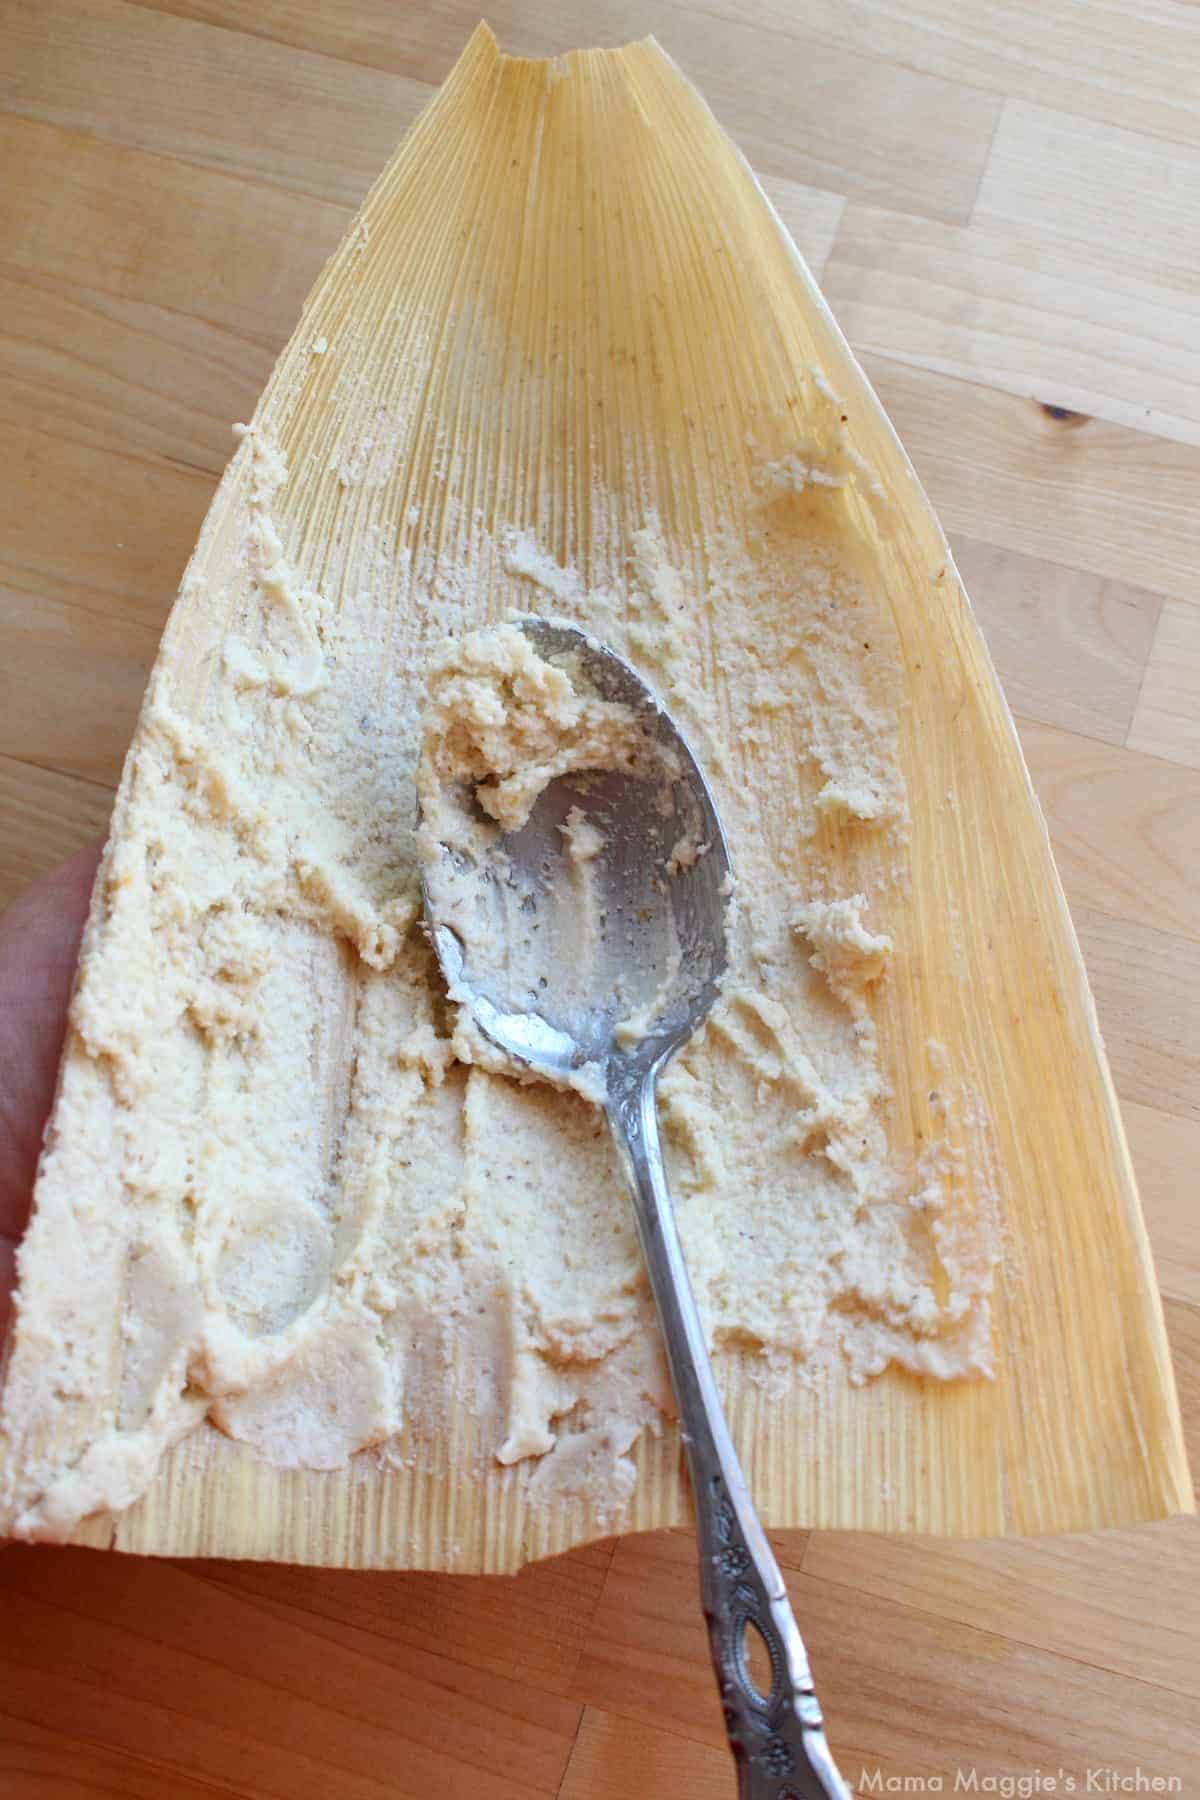 A spoon spreading masa on a corn husk.